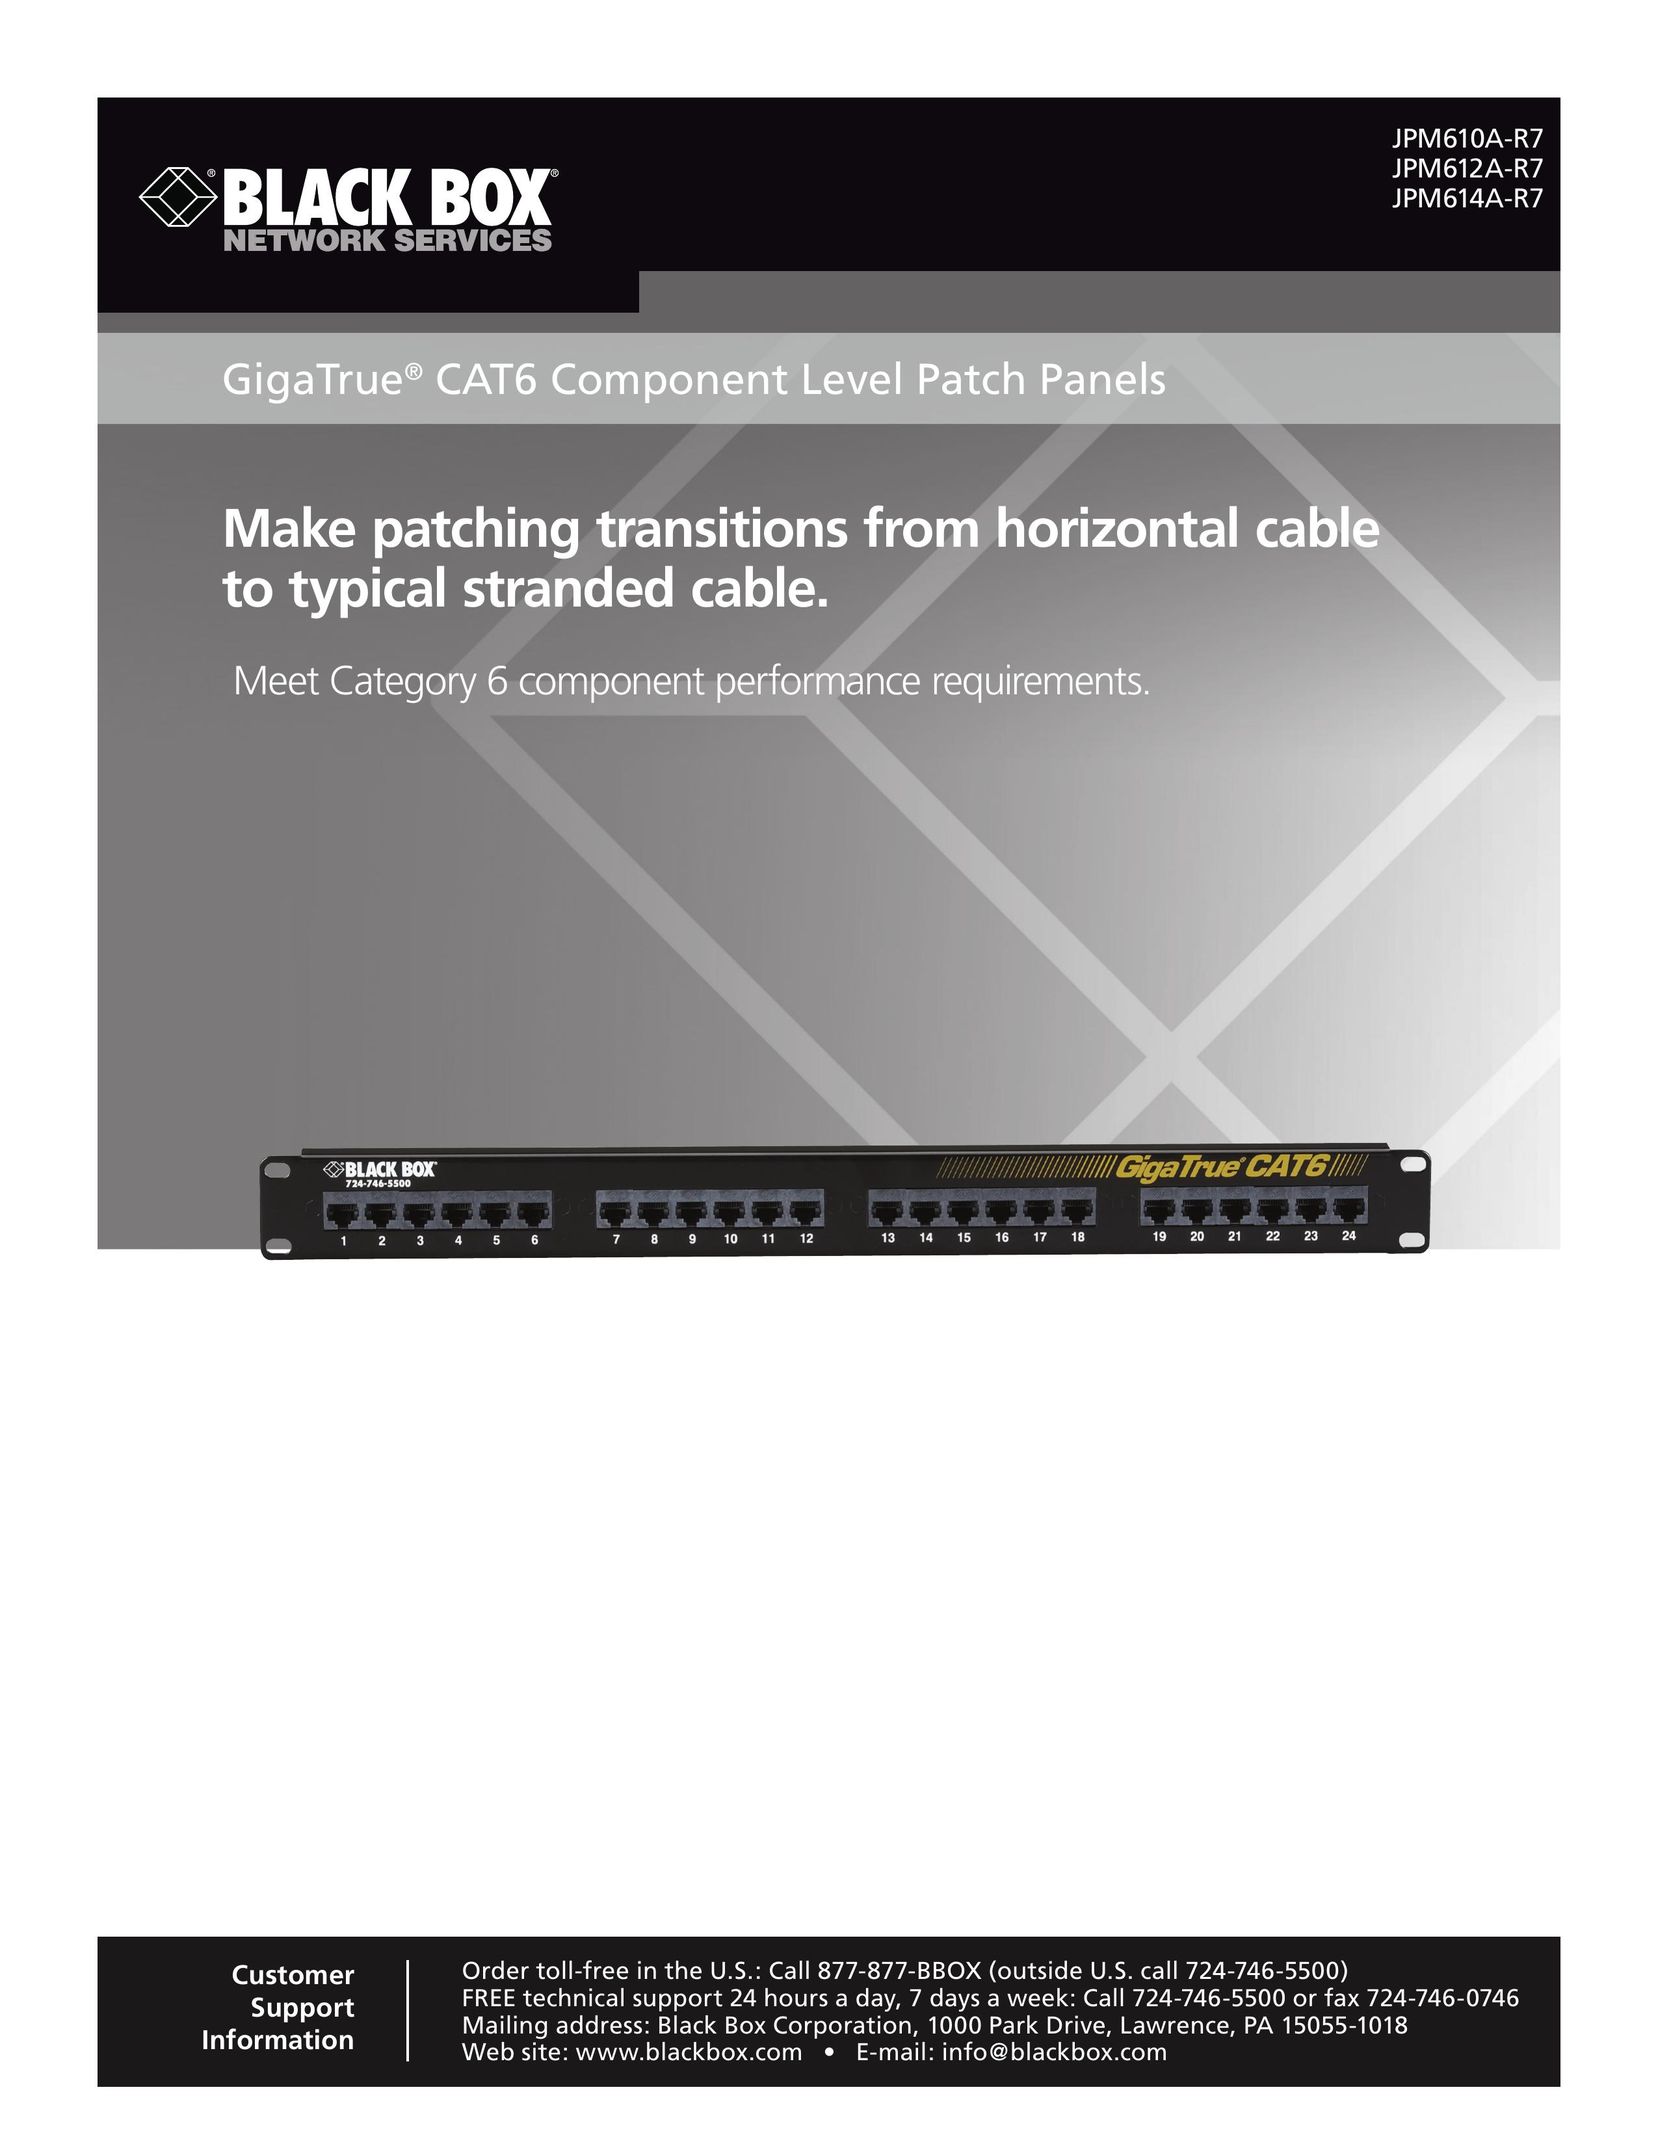 Black Box gigatrue cat6 component level patch panels Computer Accessories User Manual